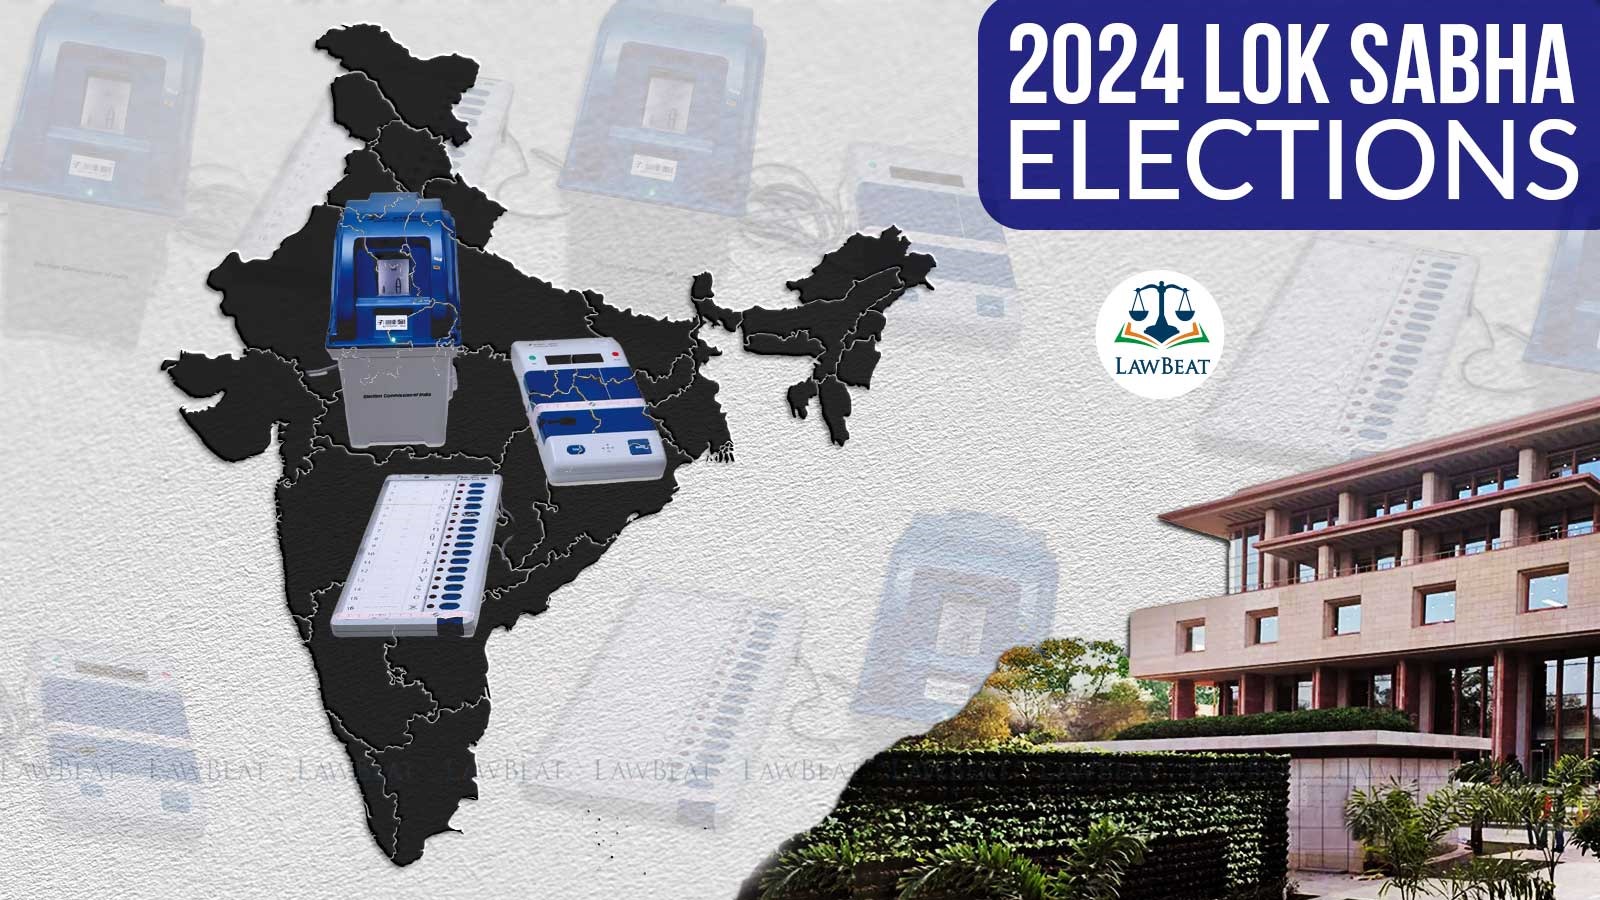 Dhc%2B India's Map (with 2024 Lok Sabha Elections Written) %2B EVM%2B VVPAT 1 